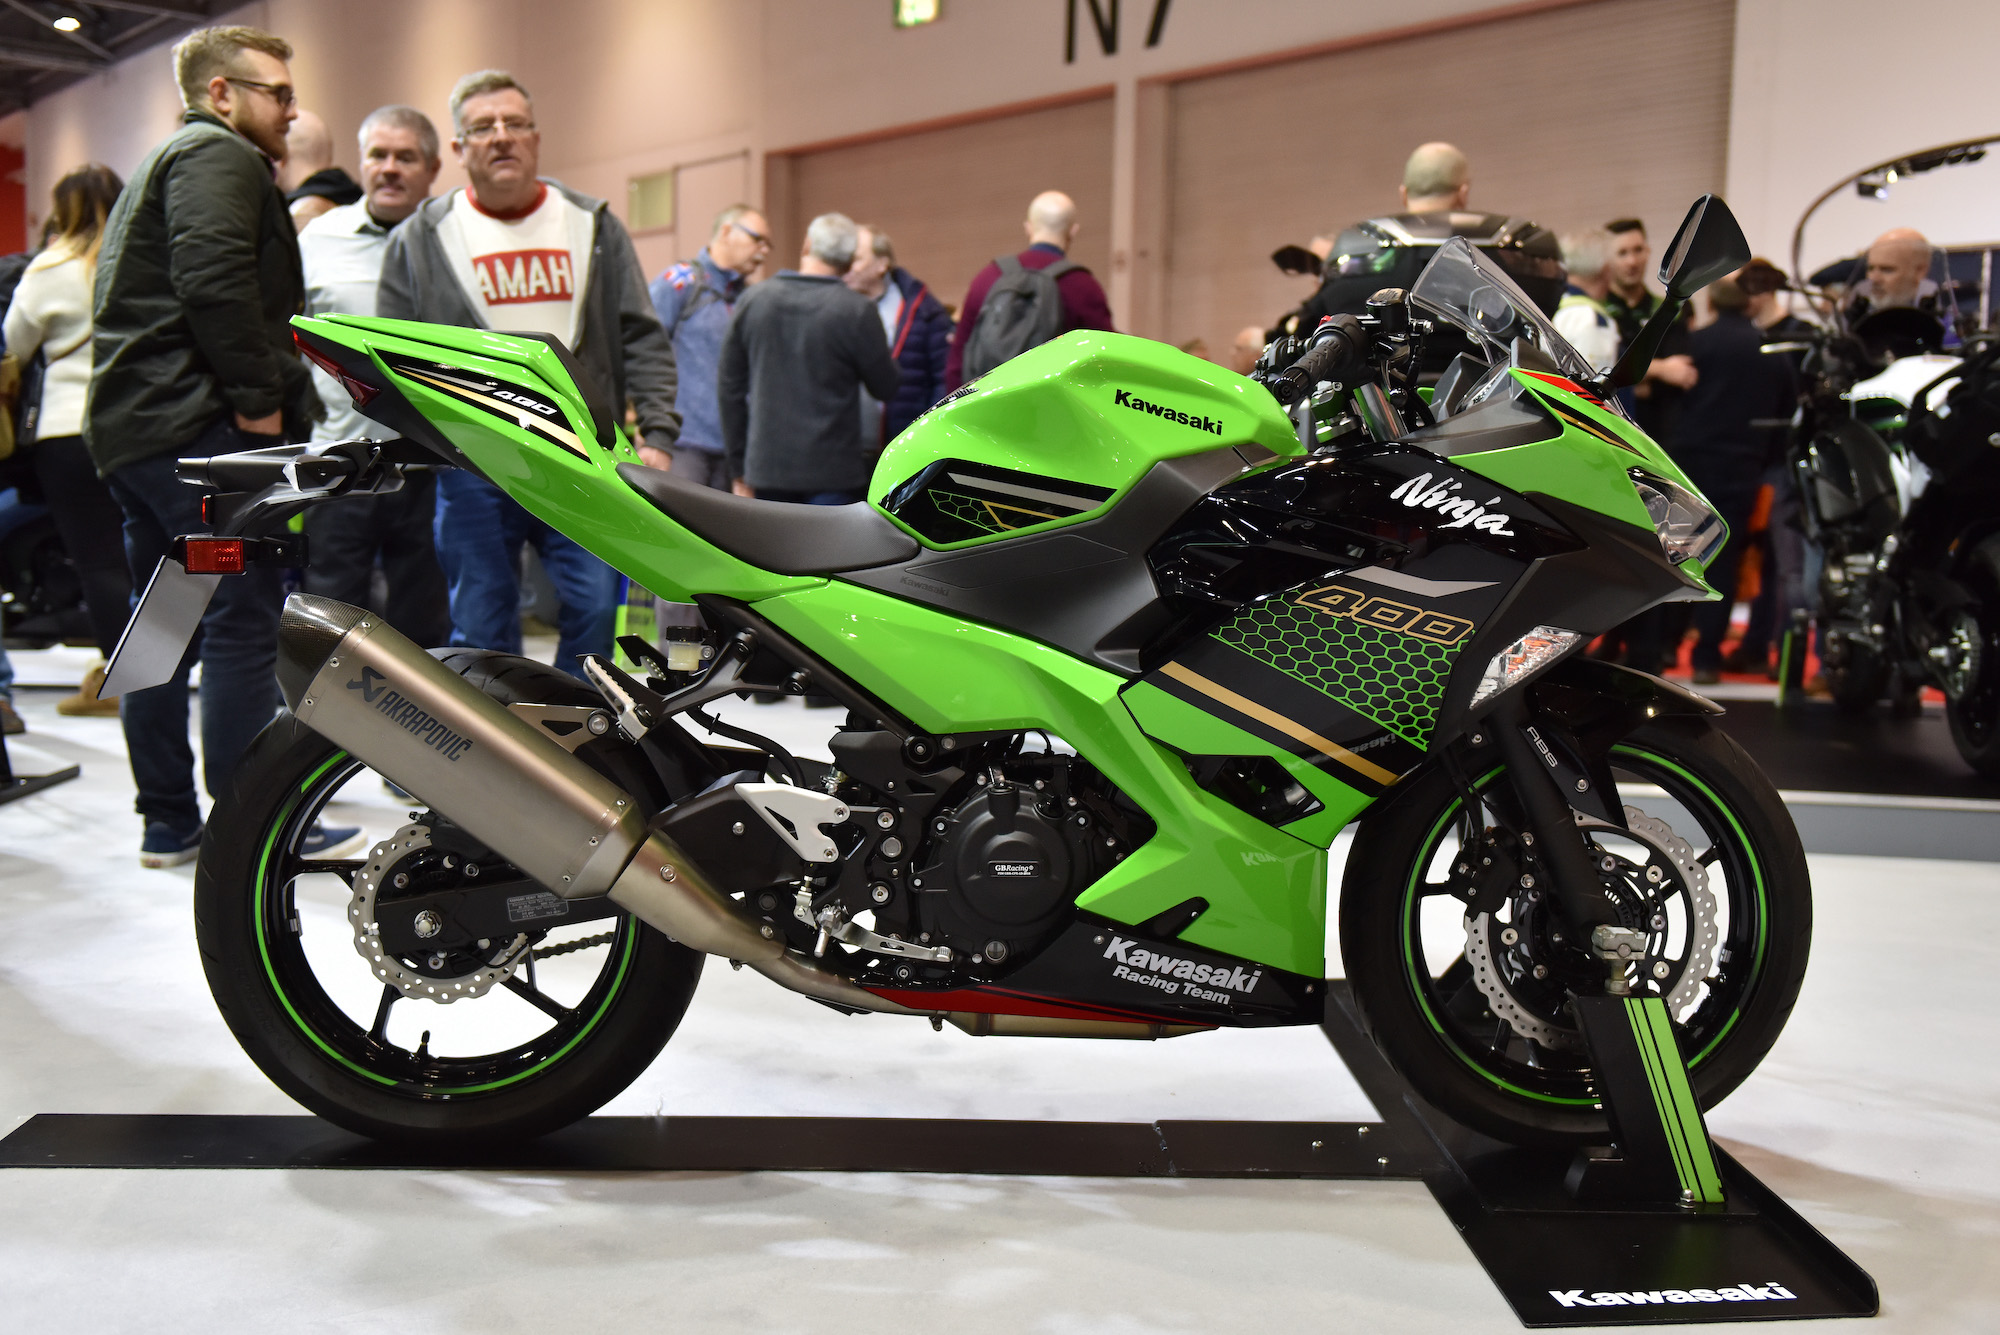 Kawasaki Ninja 400 Performance Edition at ExCel on February 14, 2020, in London, England.